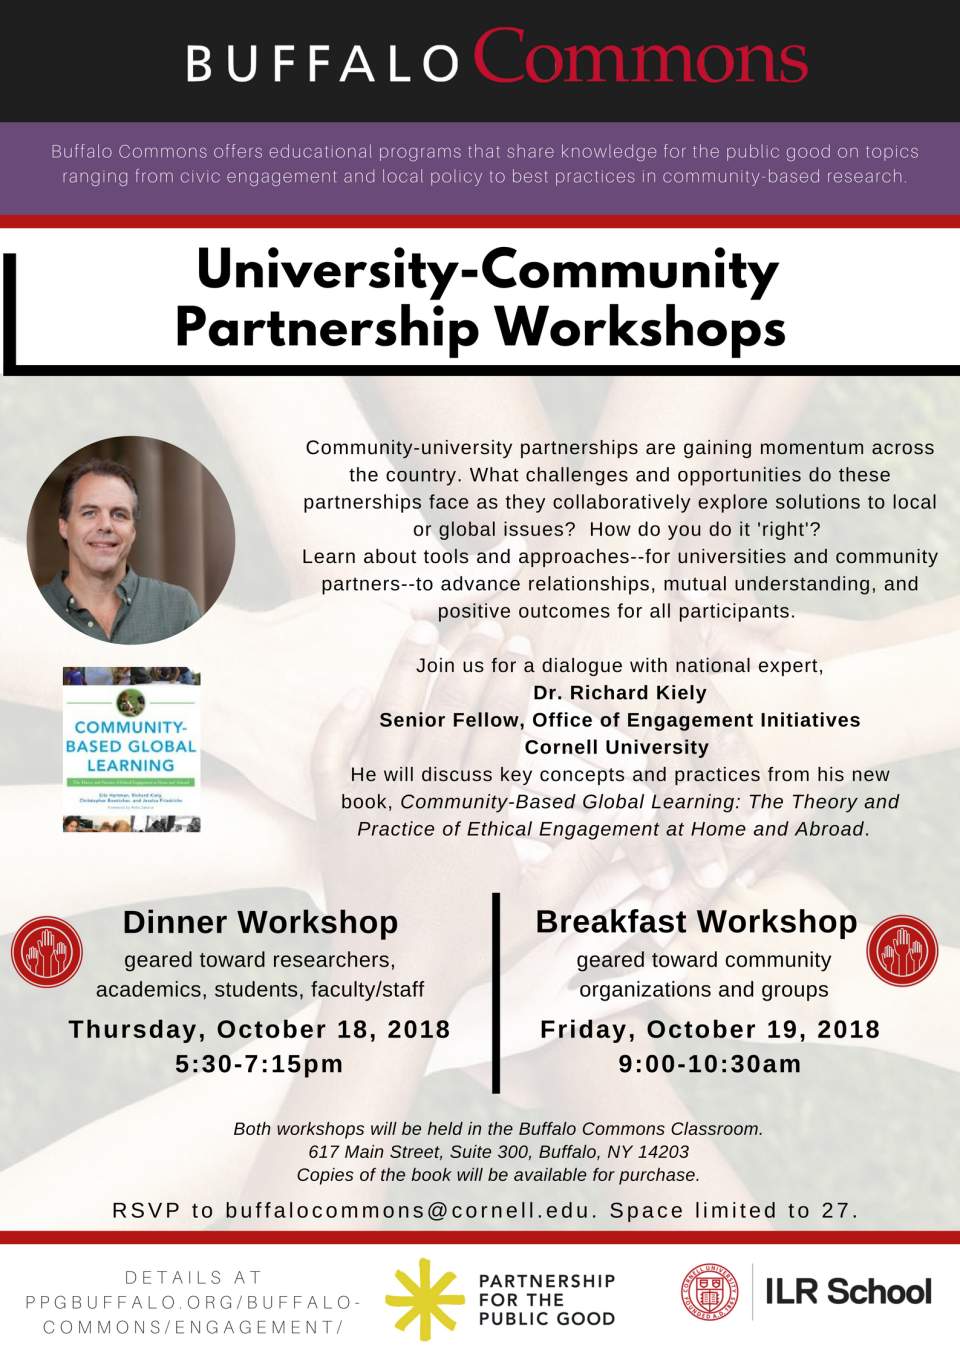 University-Community Partnership Workshop (Breakfast)